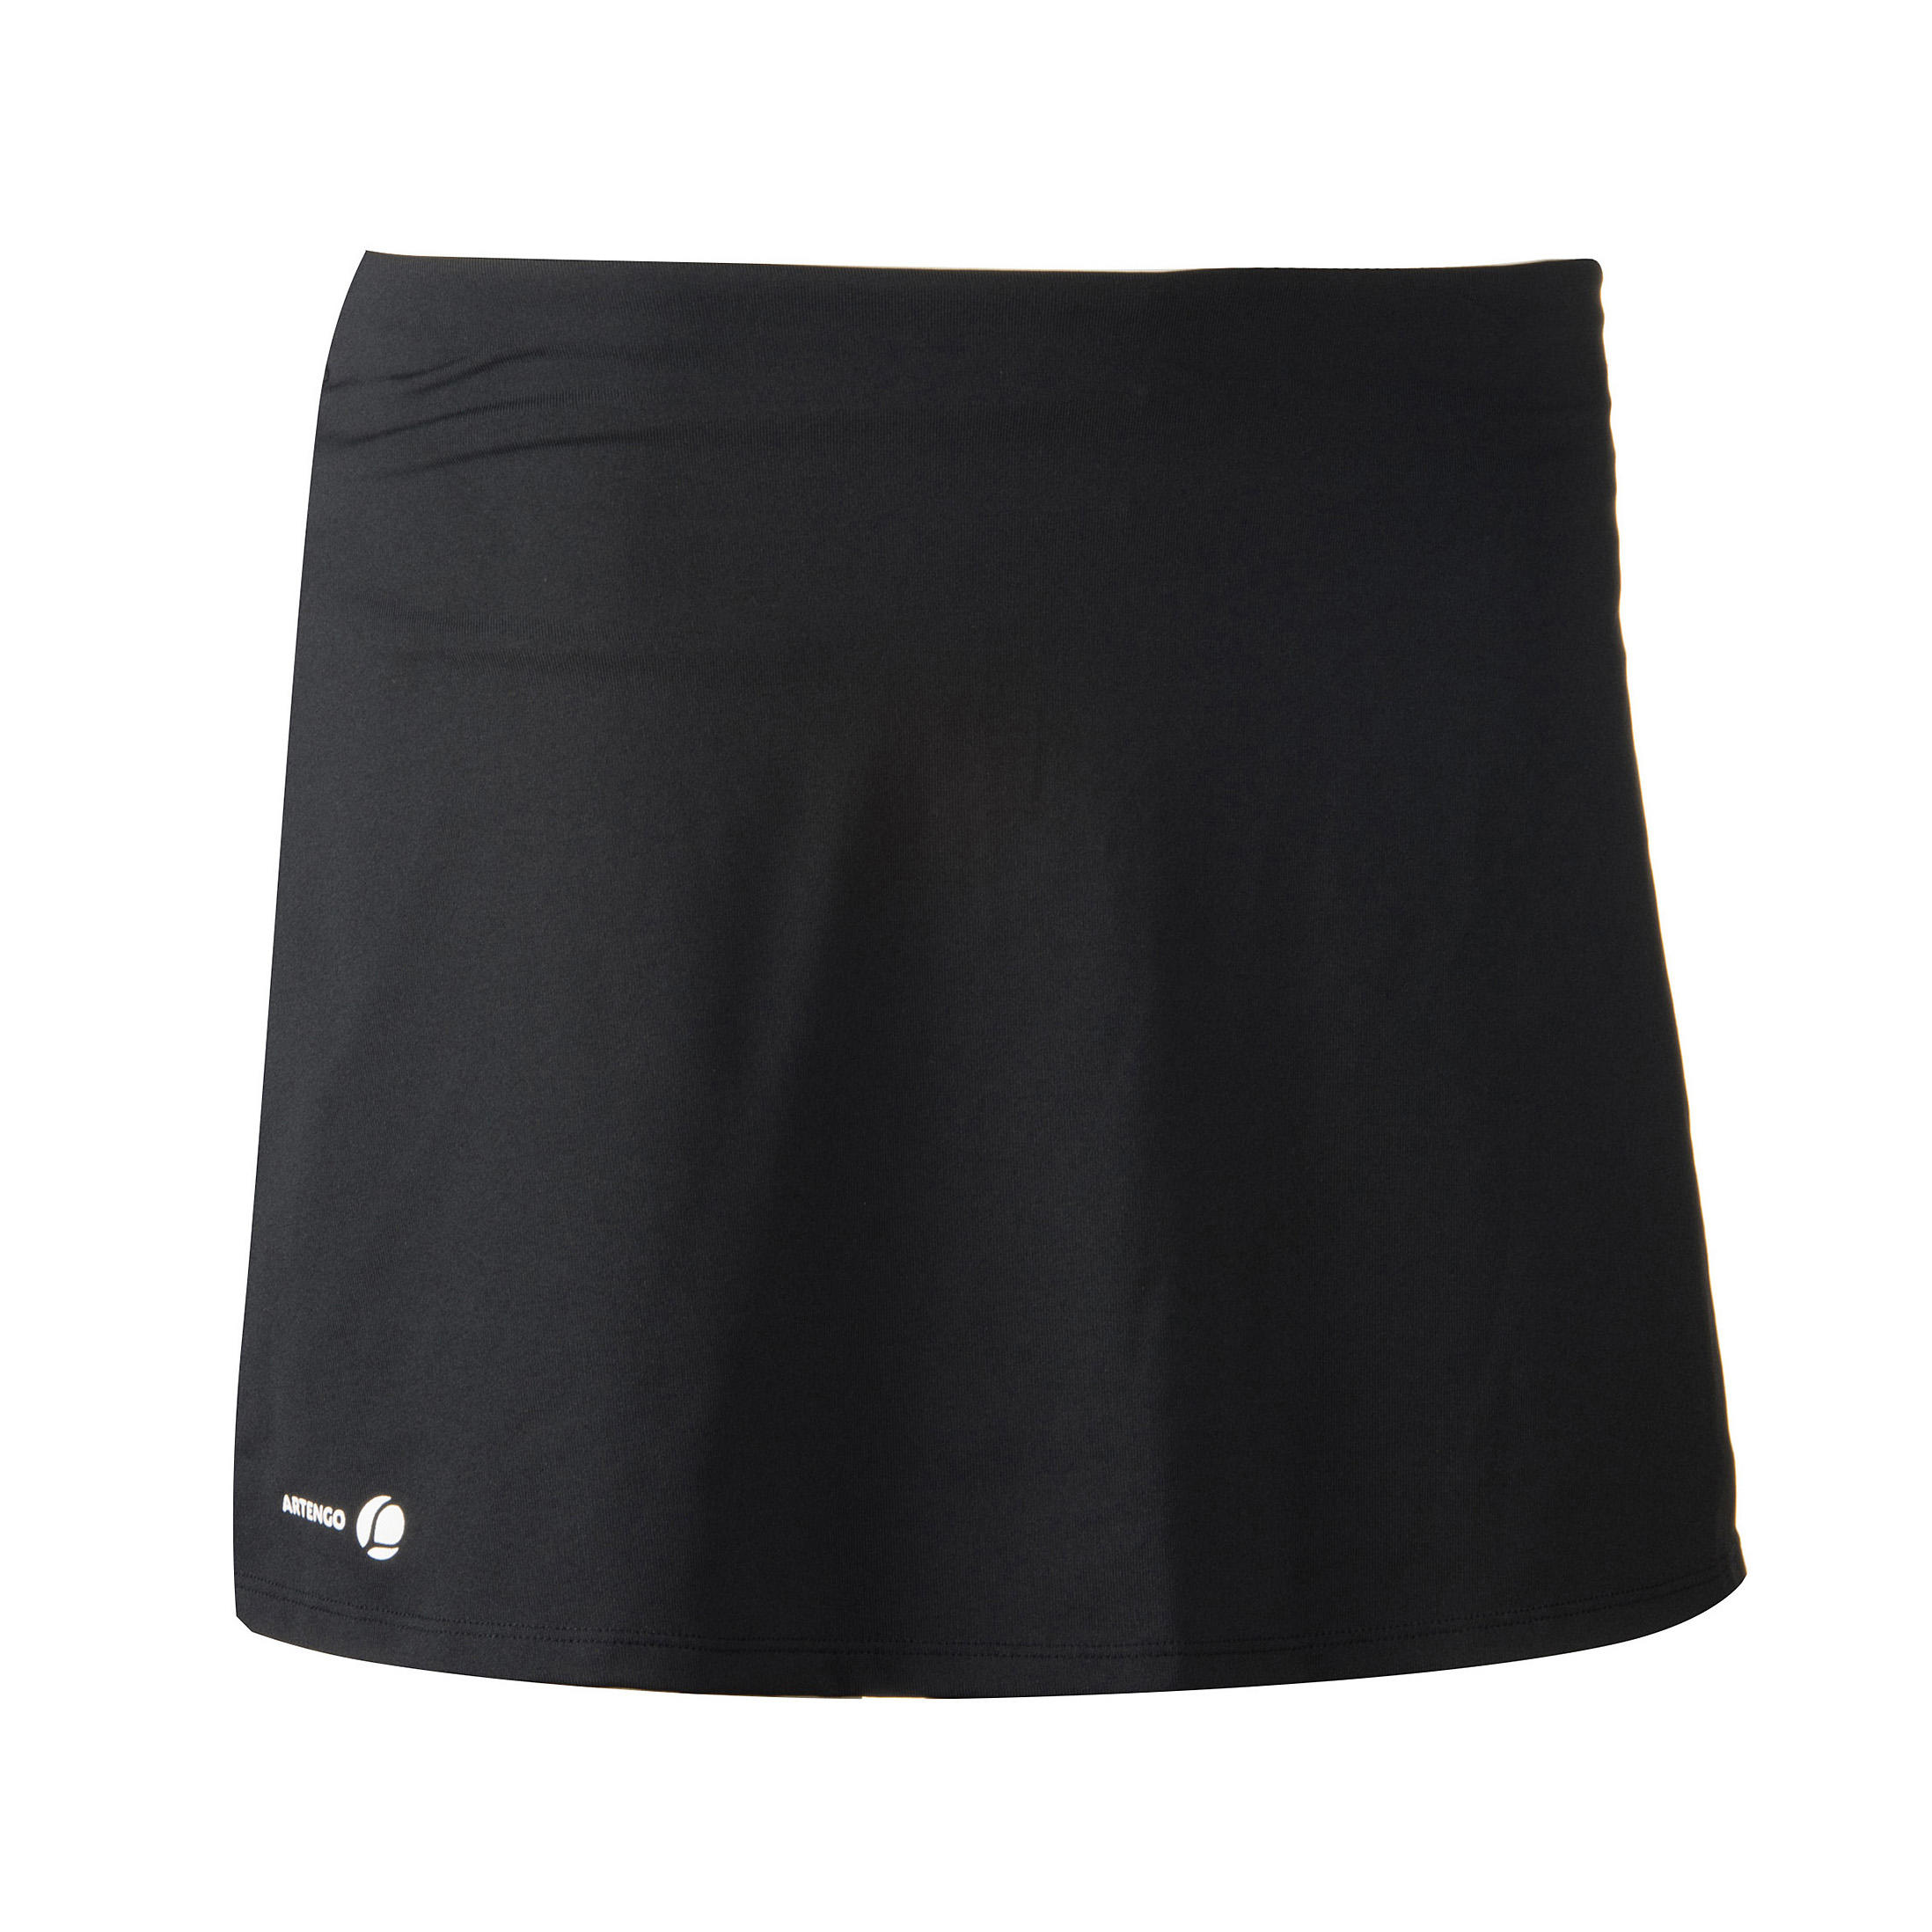 Essential Women's Tennis Badminton Table Tennis Padel Squash Skirt - Black